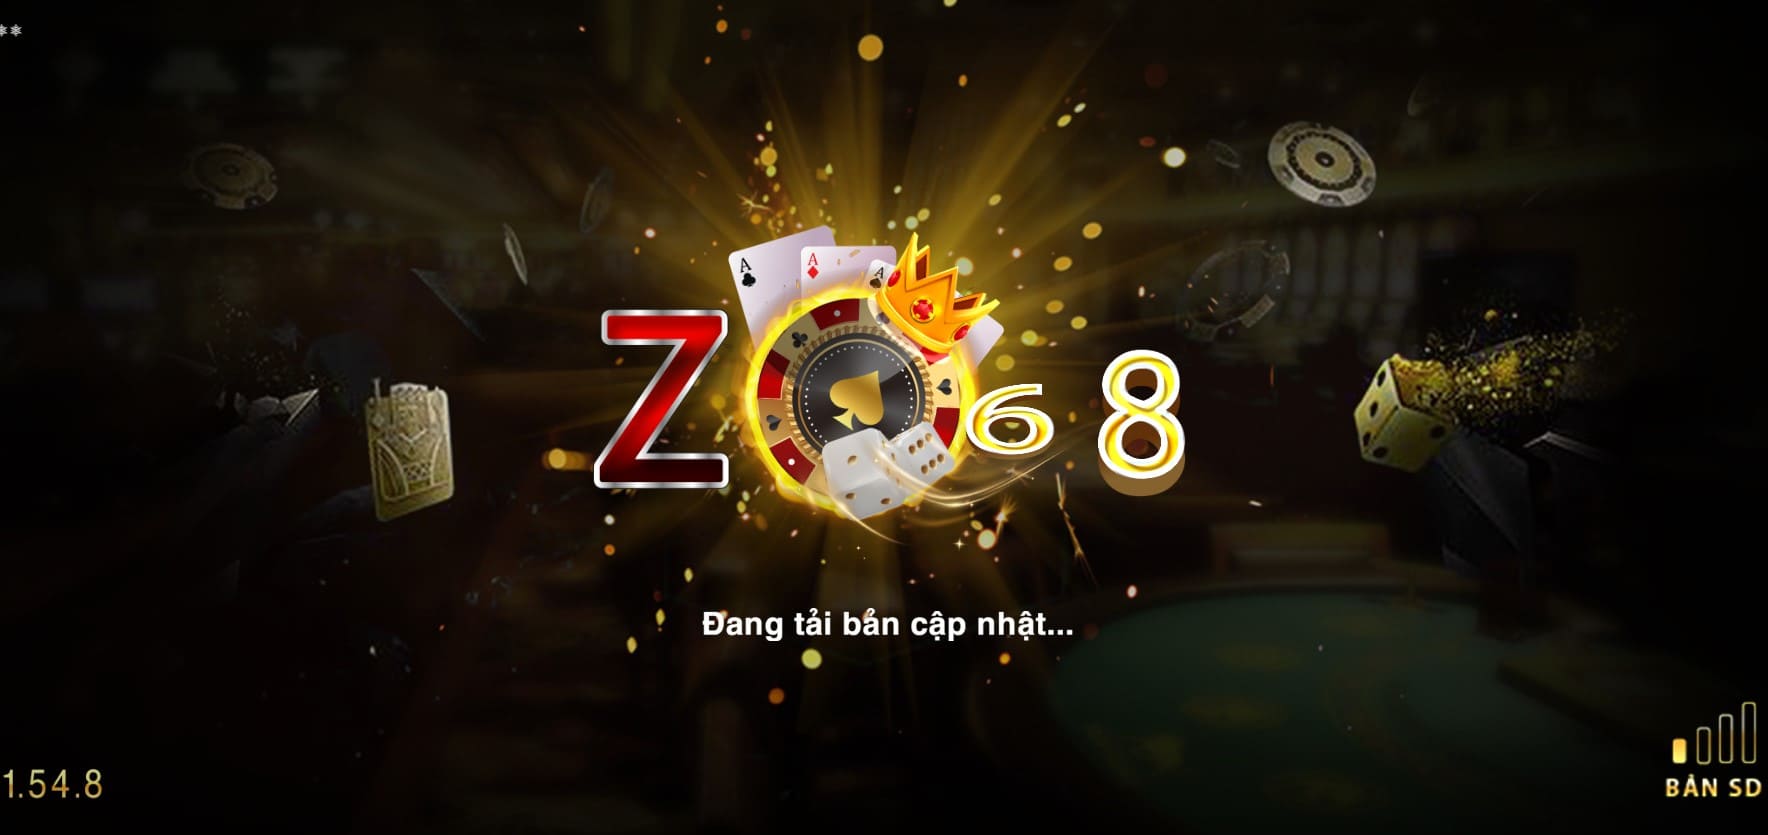 zo68 pro ong trum casino thanh toan zo68pro 1